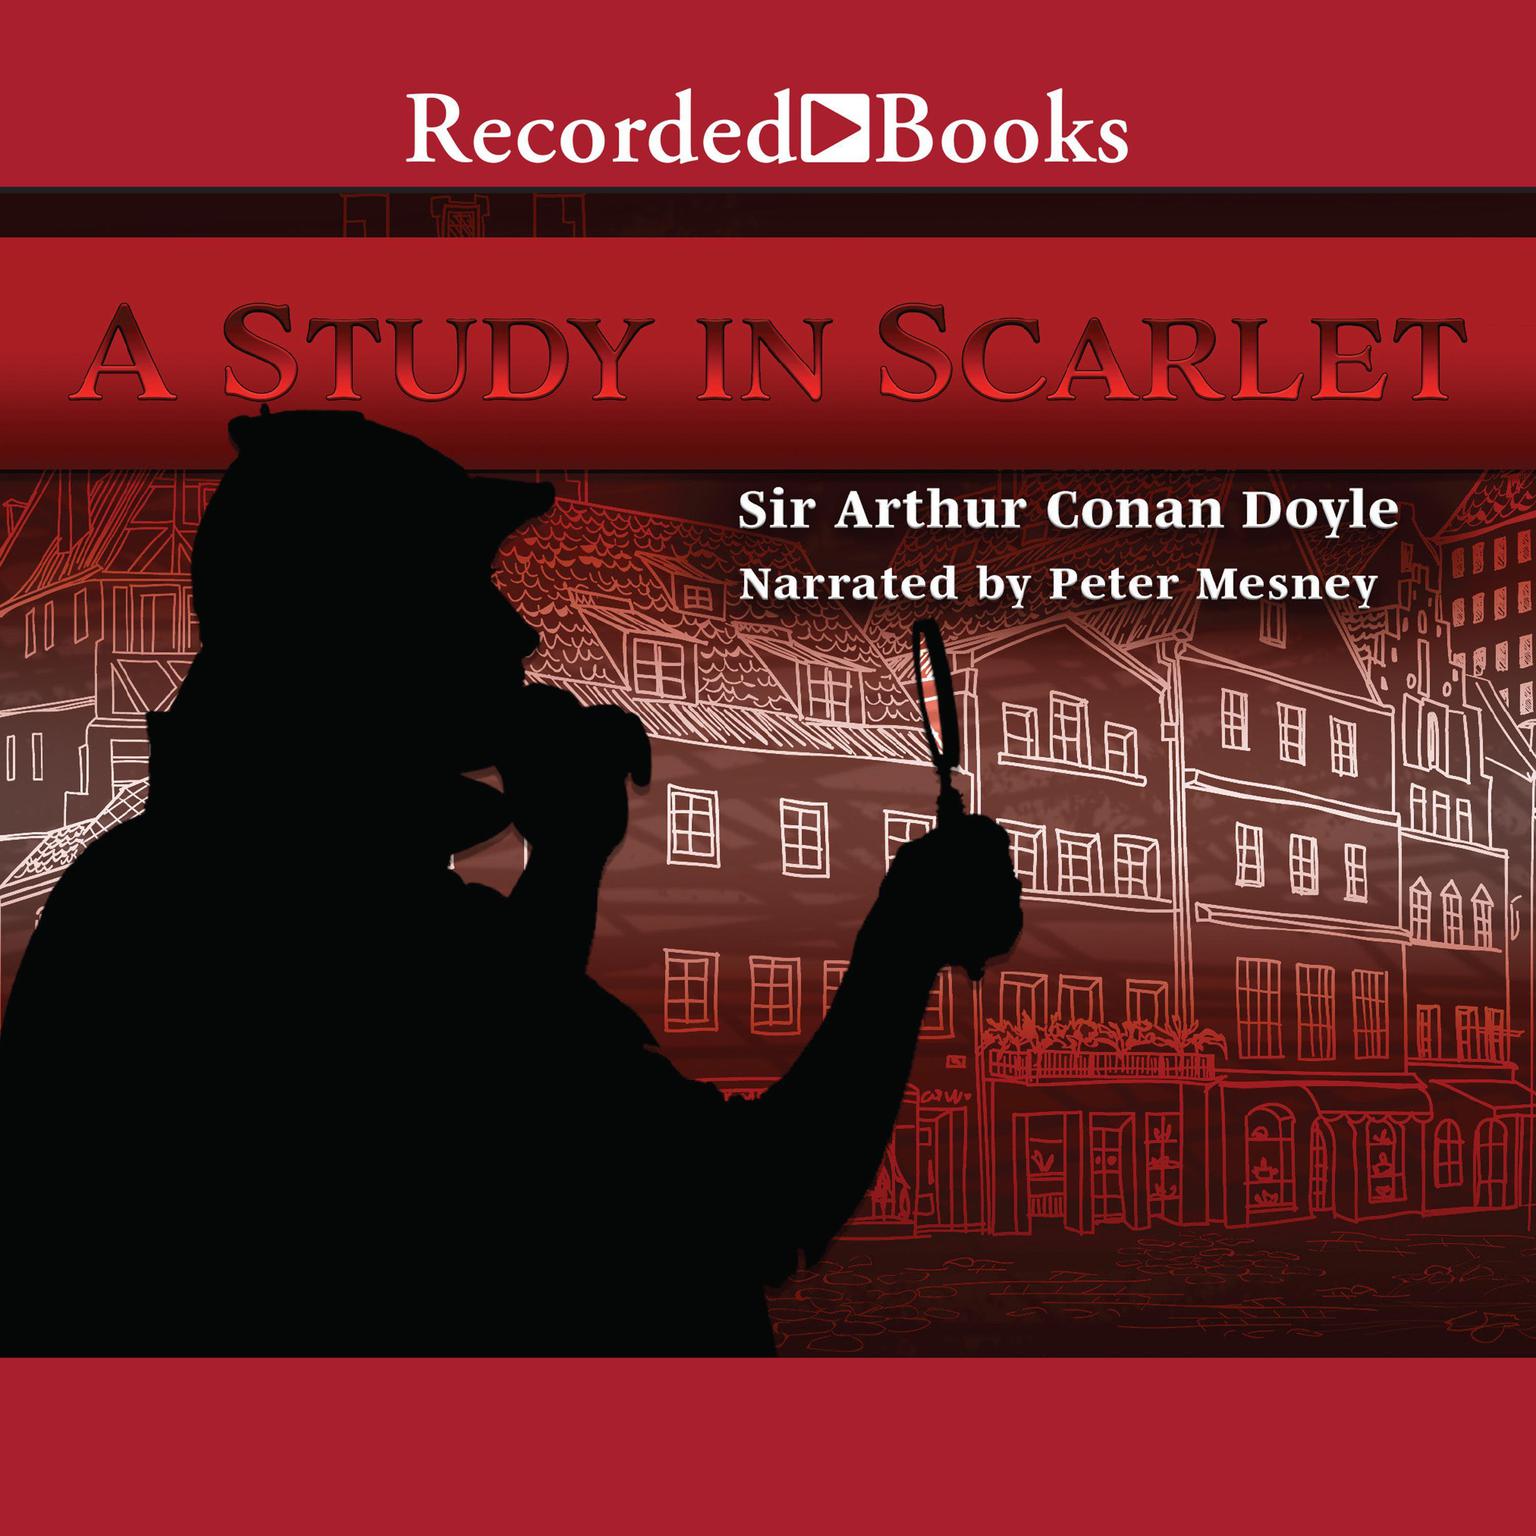 A Study in Scarlet Audiobook, by Arthur Conan Doyle